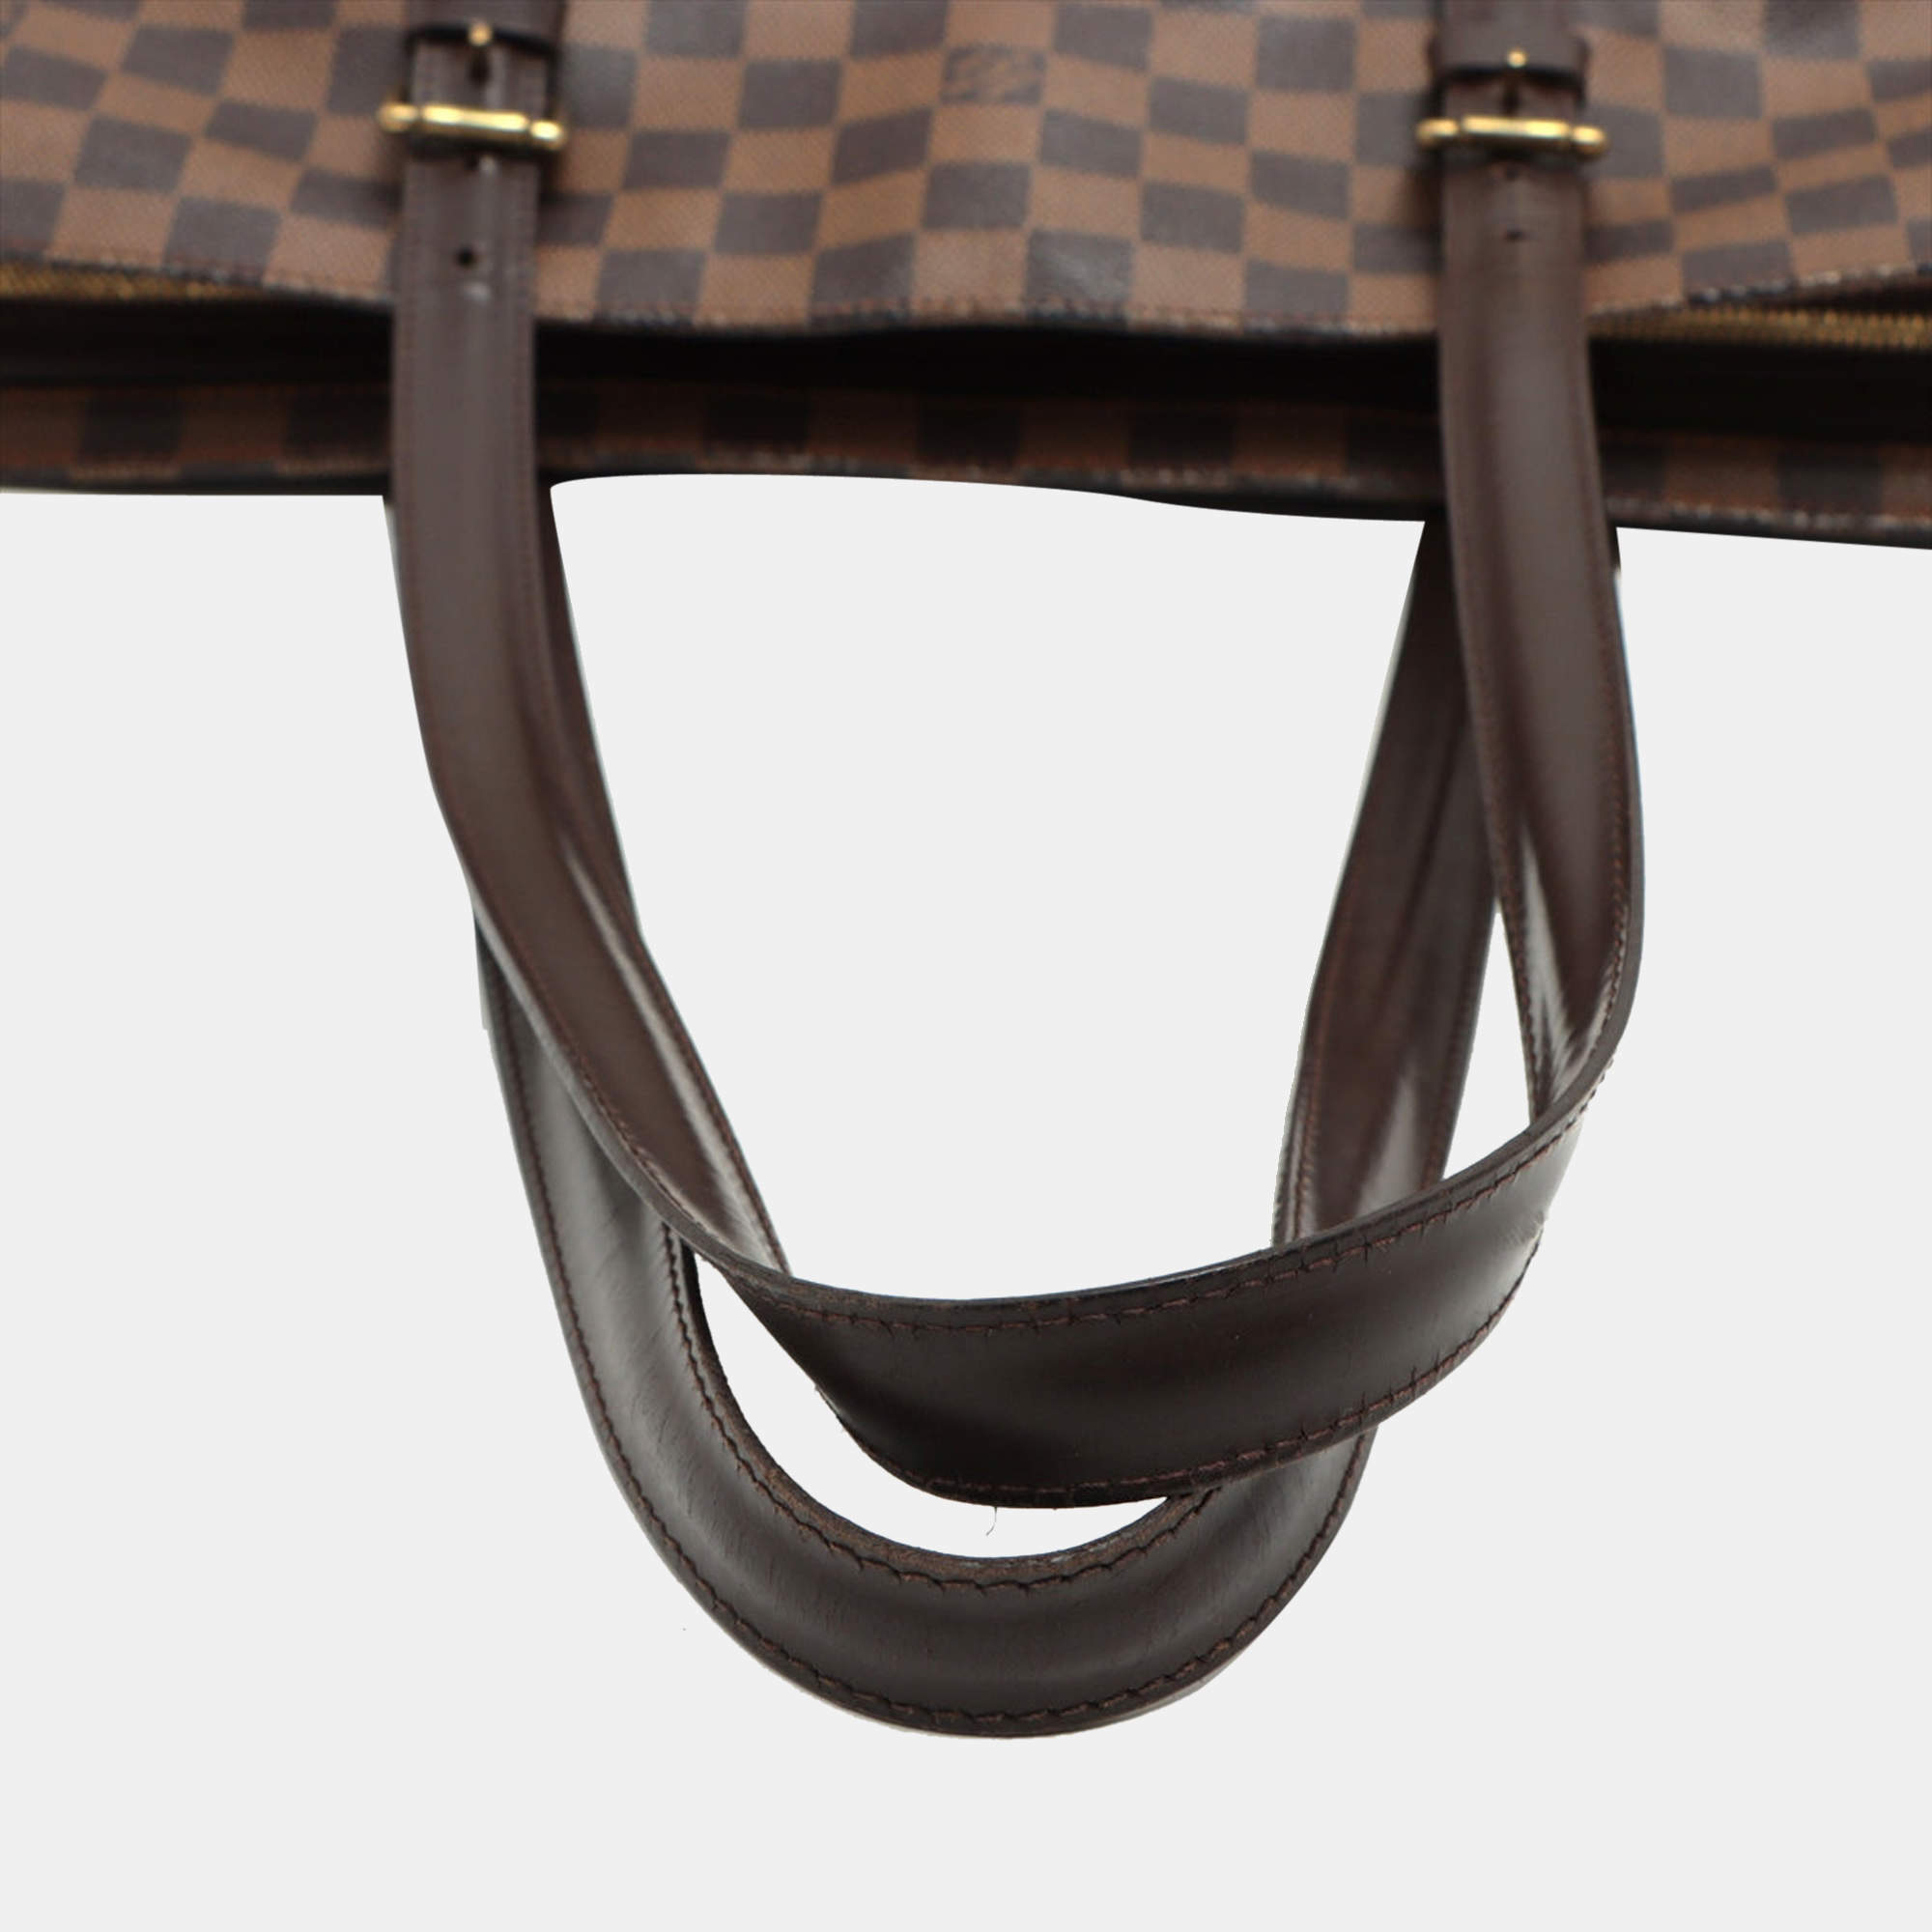 Louis Vuitton Damier Chelsea Tote Bag Shoulder Ebene N51119